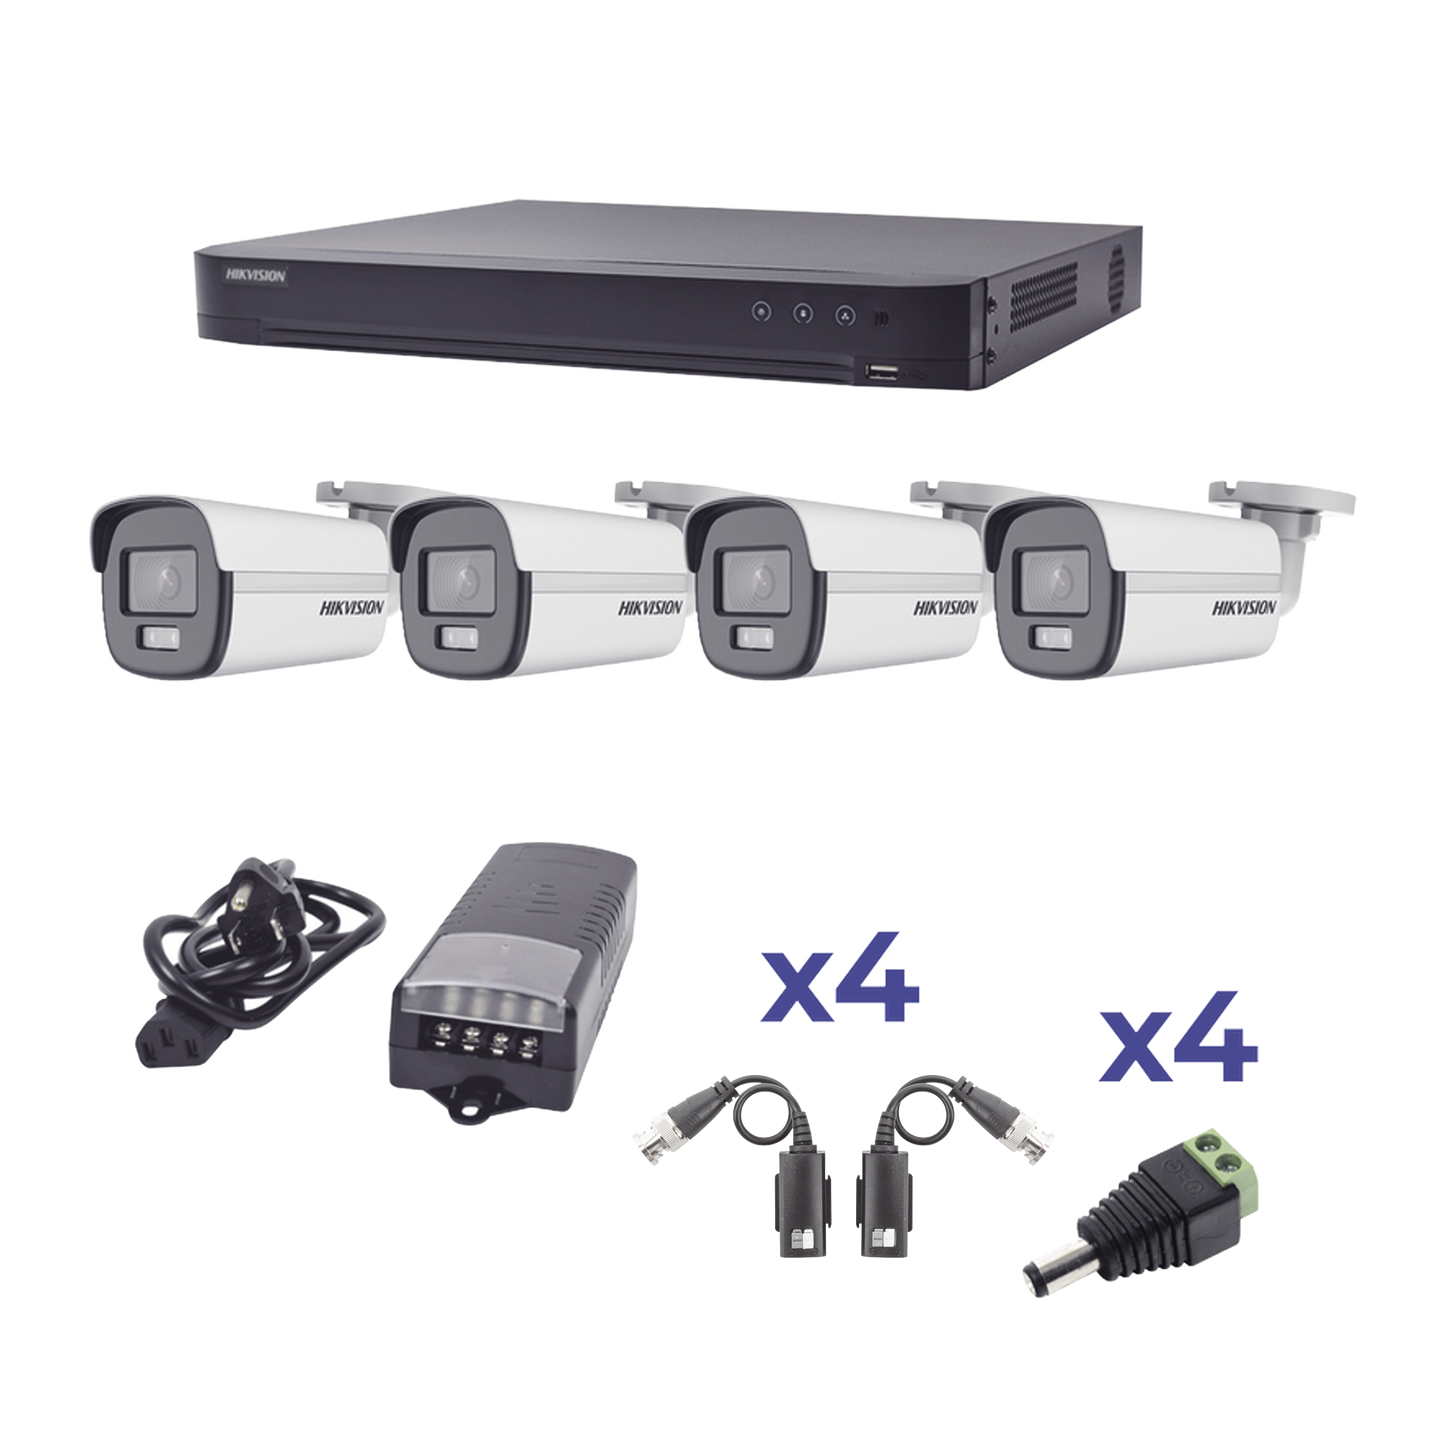 KIT COLORVU TURBOHD 1080p / DVR 4 Canales / 4 Cámaras Bala (exterior) lente 2.8mm / Fuente de poder profesional / Transceptores de video y Accesorios de corriente